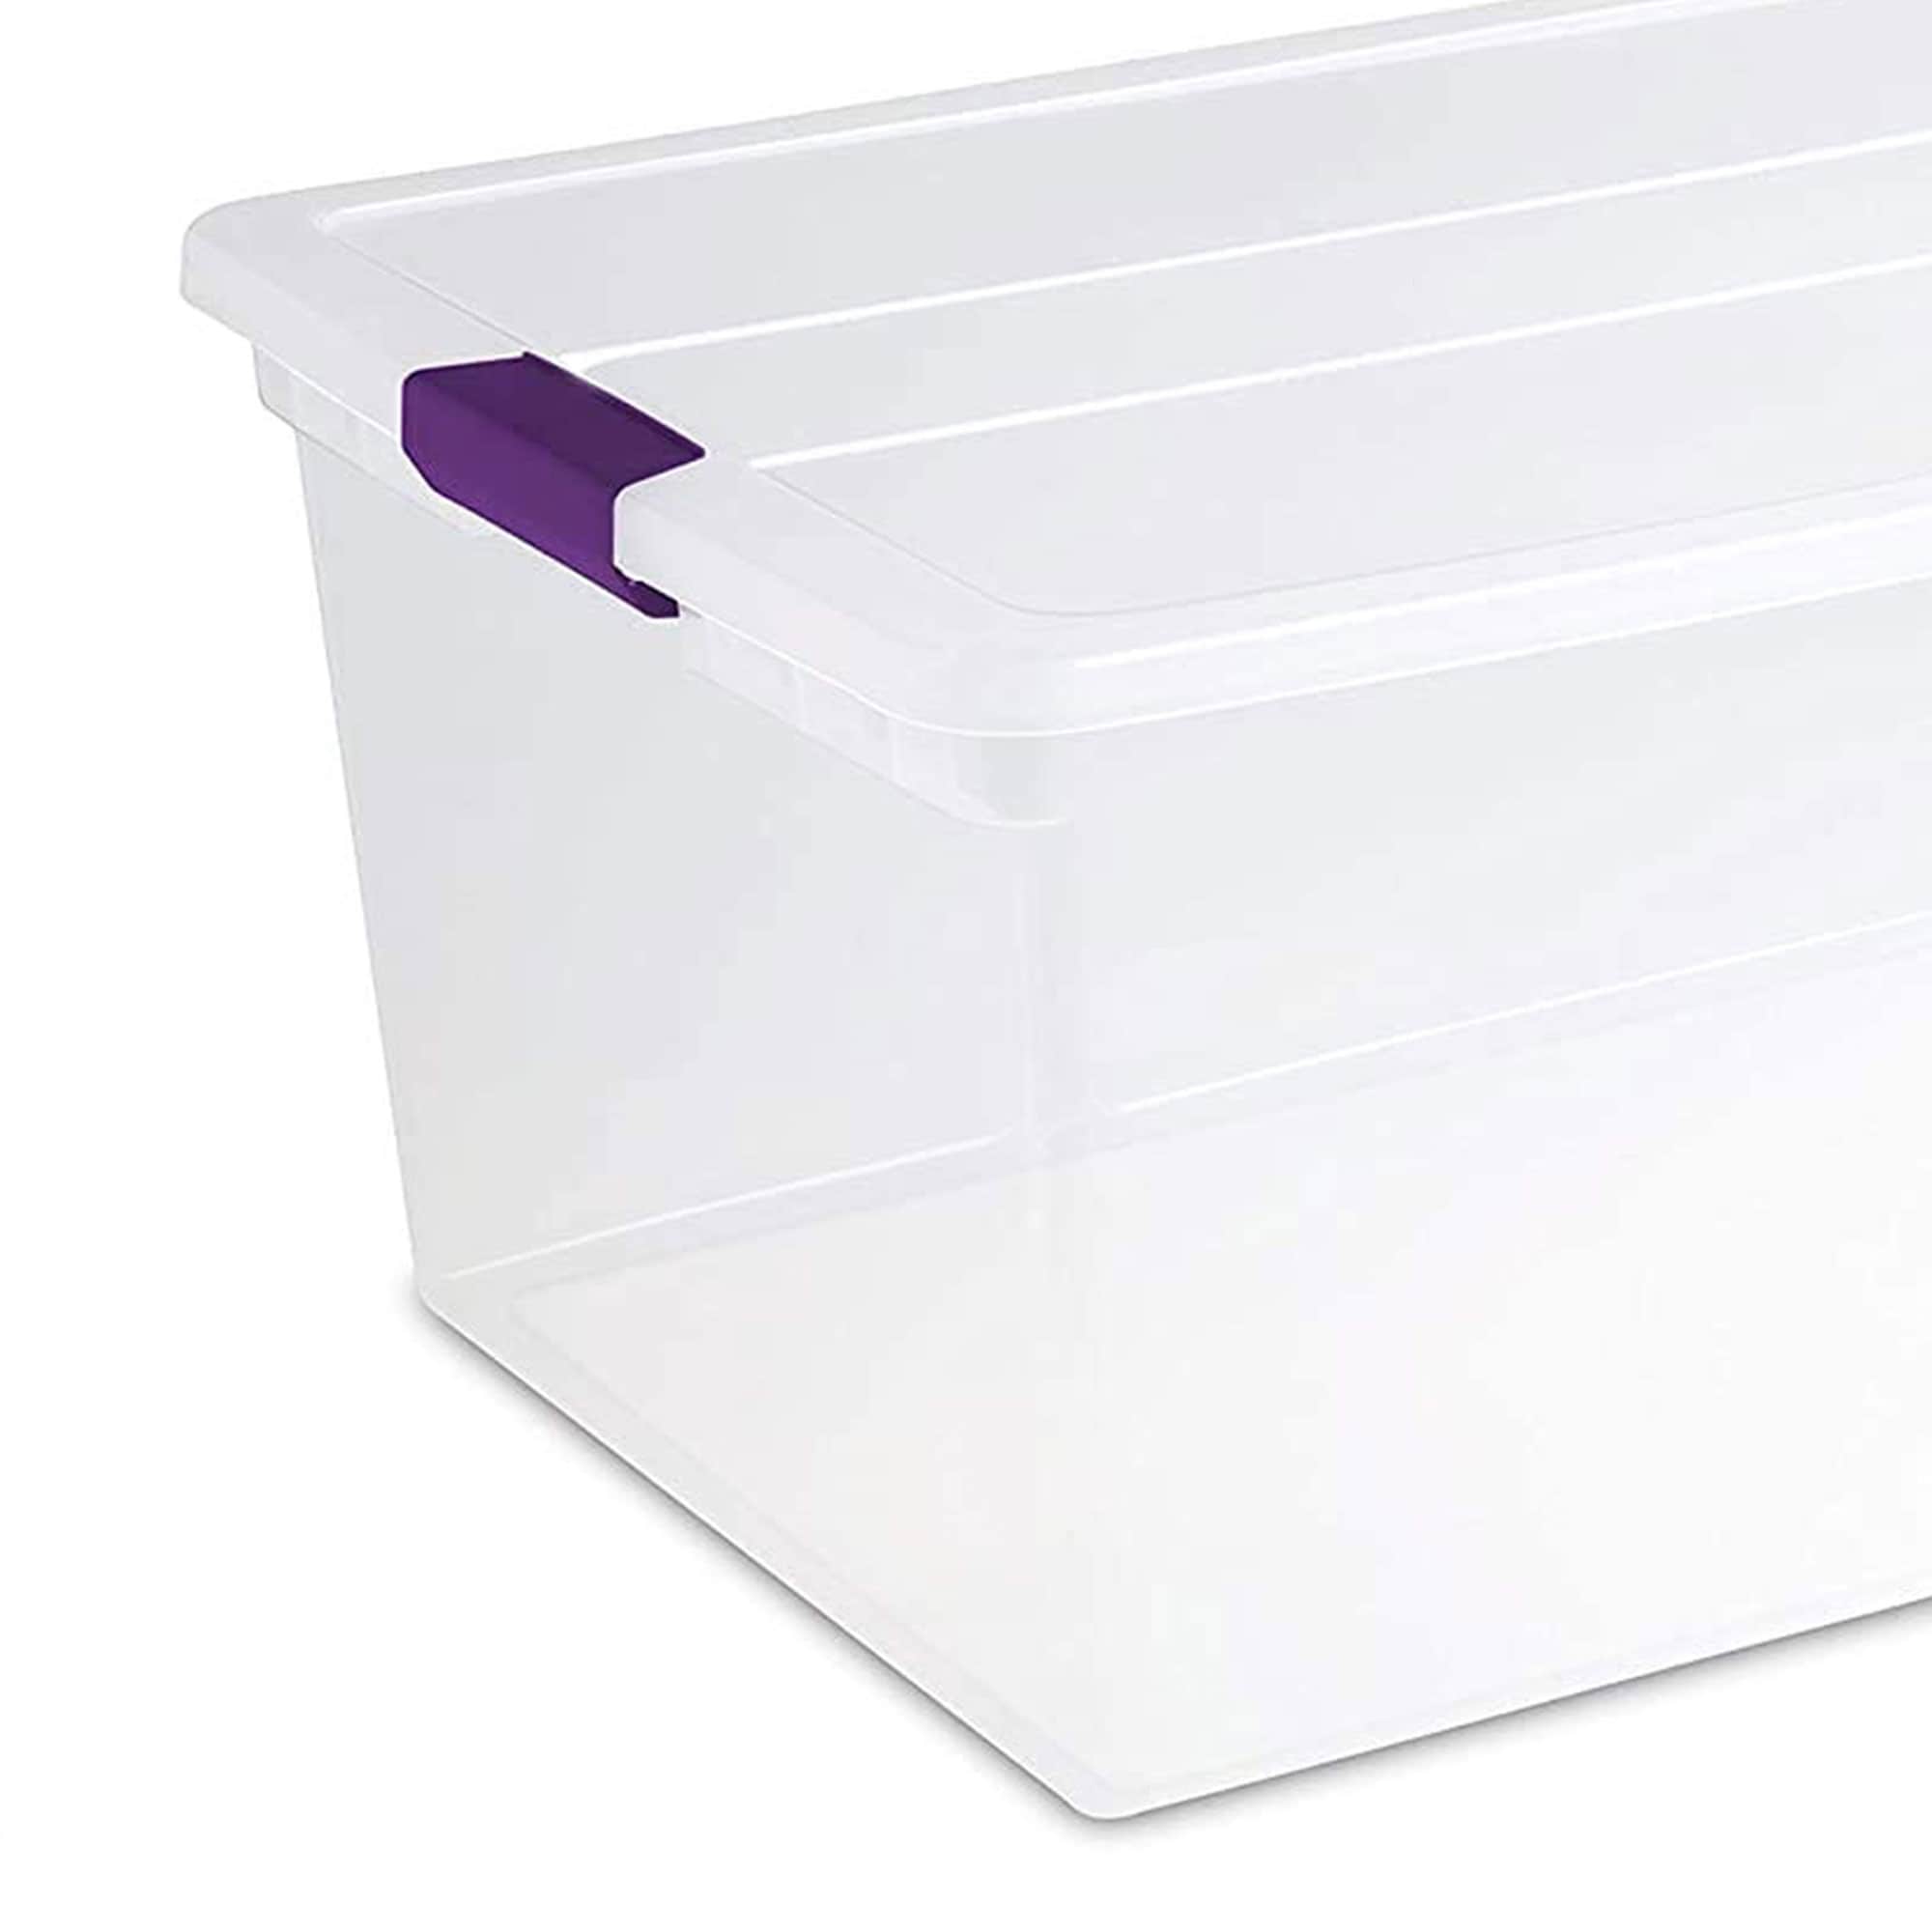 Sterilite 64-Quart Latching Storage Tote Box 6 Pack + Medium Clip Box 4 Pack